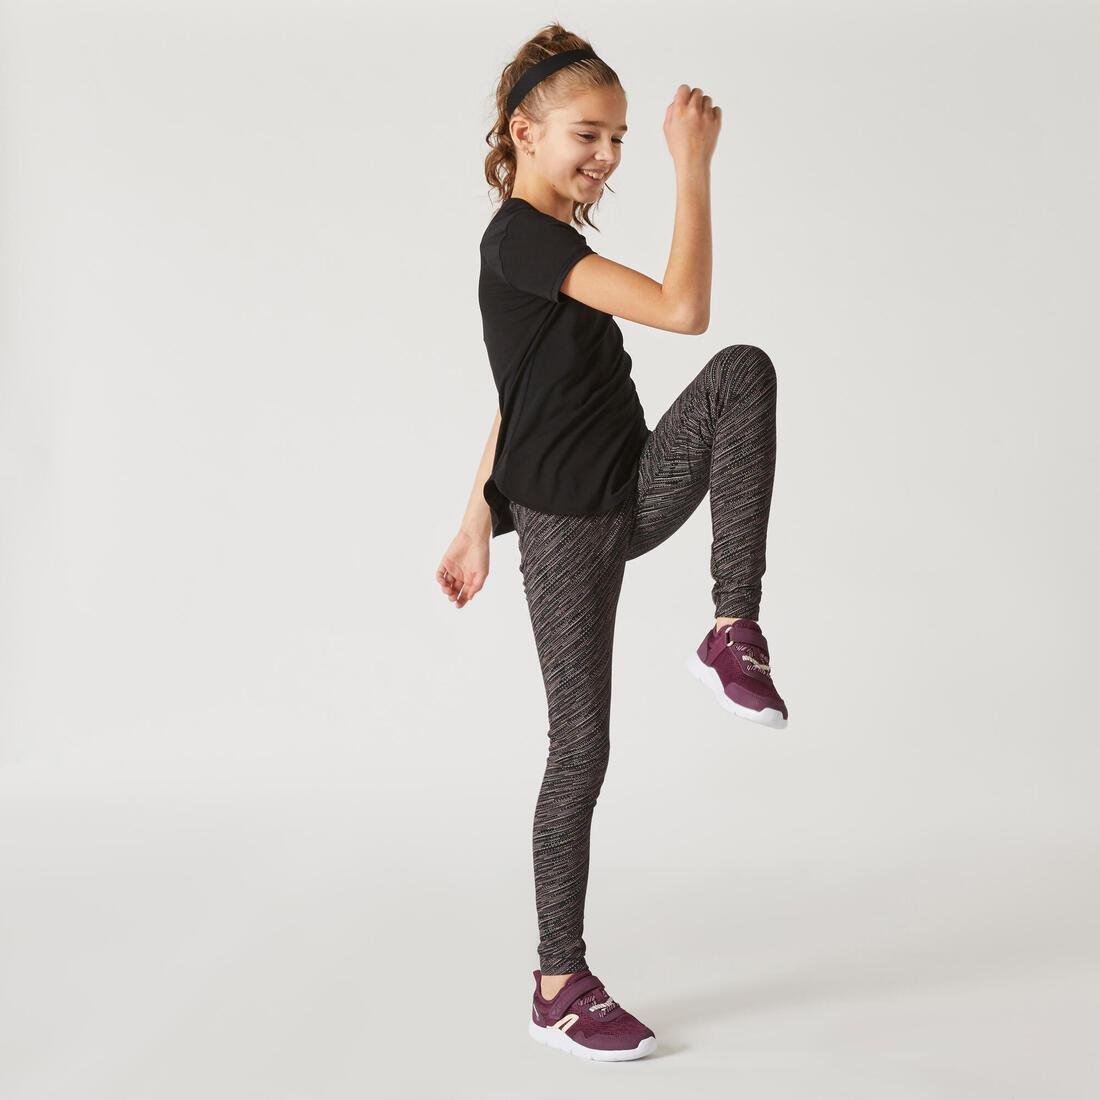 Women's Cotton Gym Legging 500 - Black